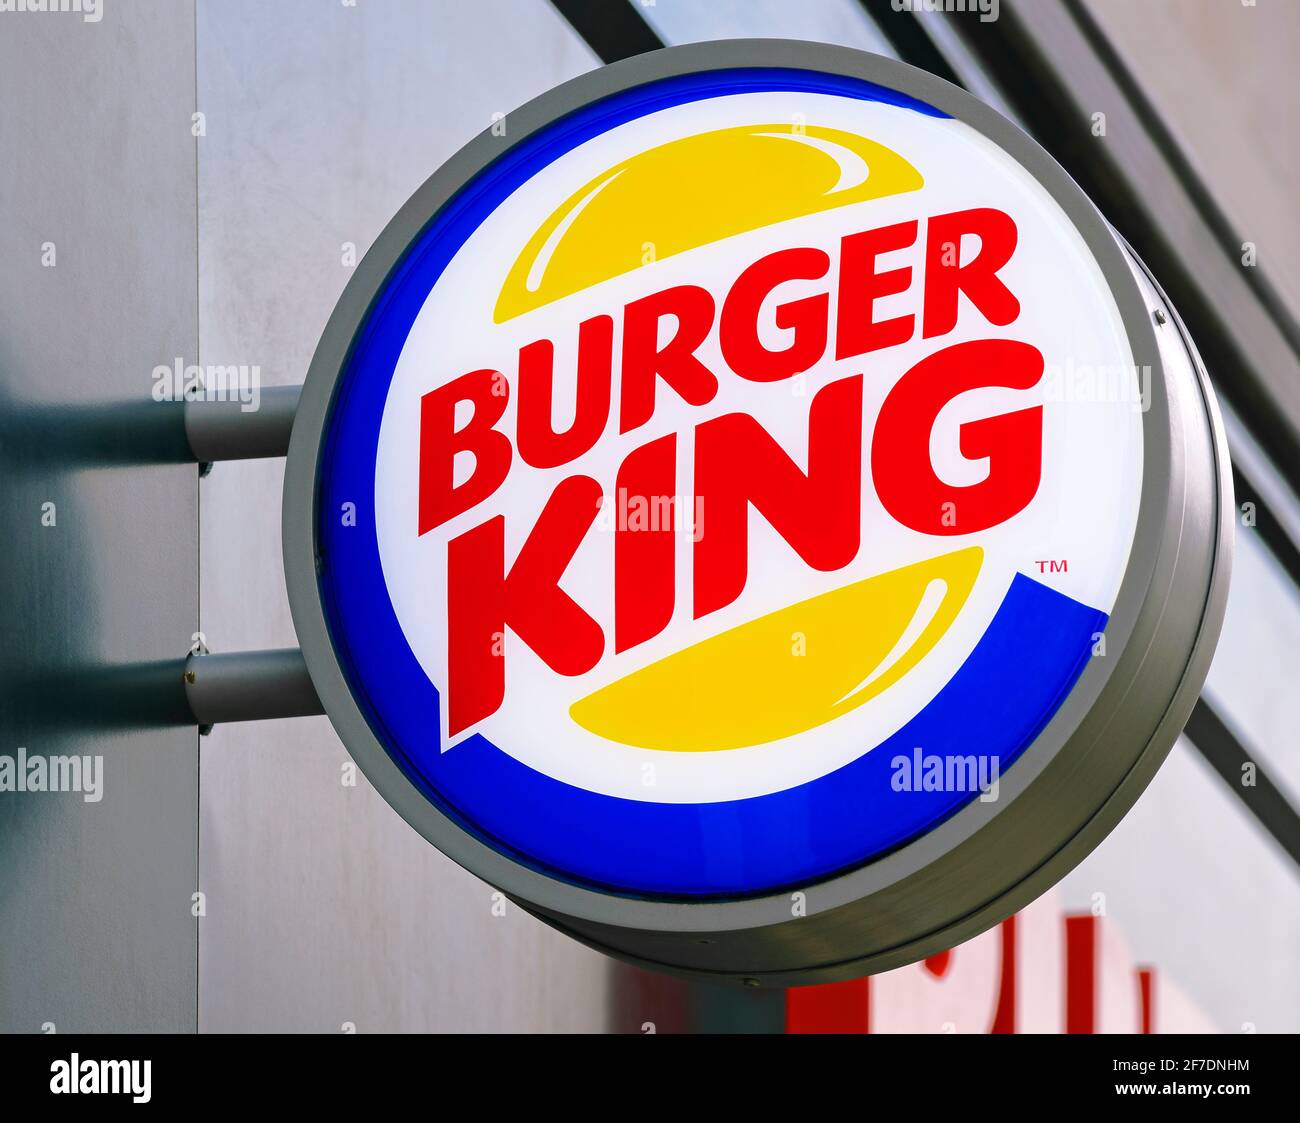 Burger King, Oxford, United Kingdom Stock Photo